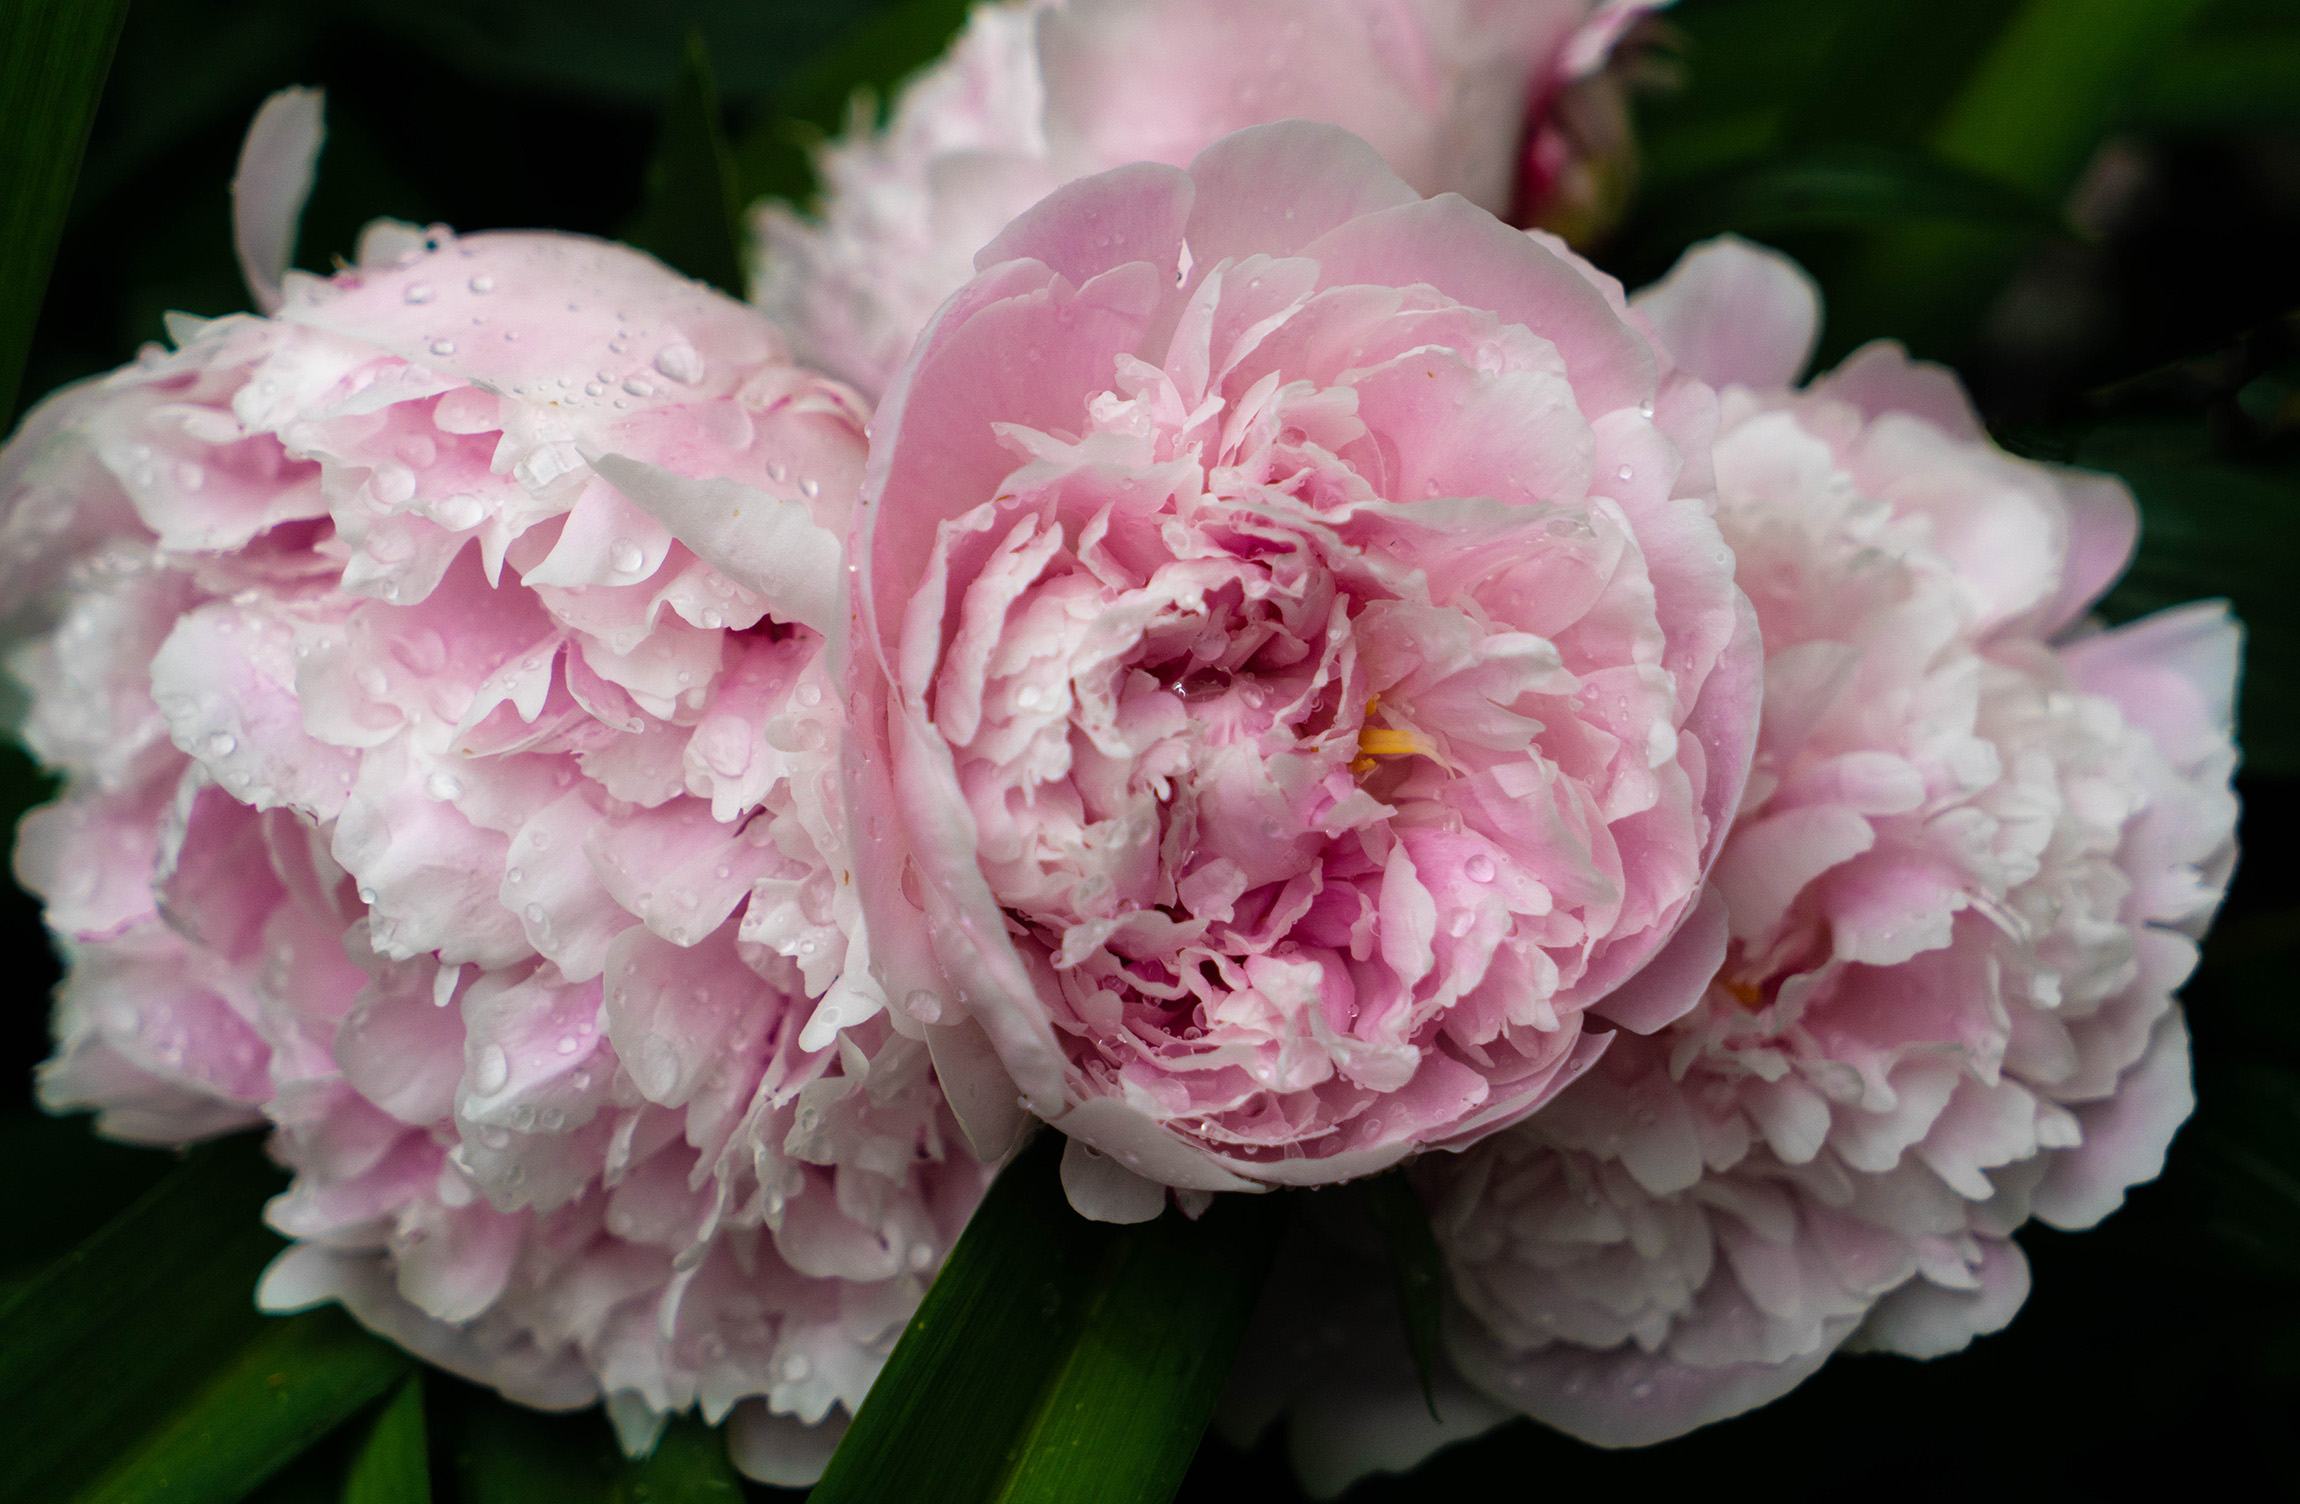 #pink, #peonies, #may, #rain, #raindrops, #spring, #nature, #flowers, #mybackyard, #bouquiet, #sony